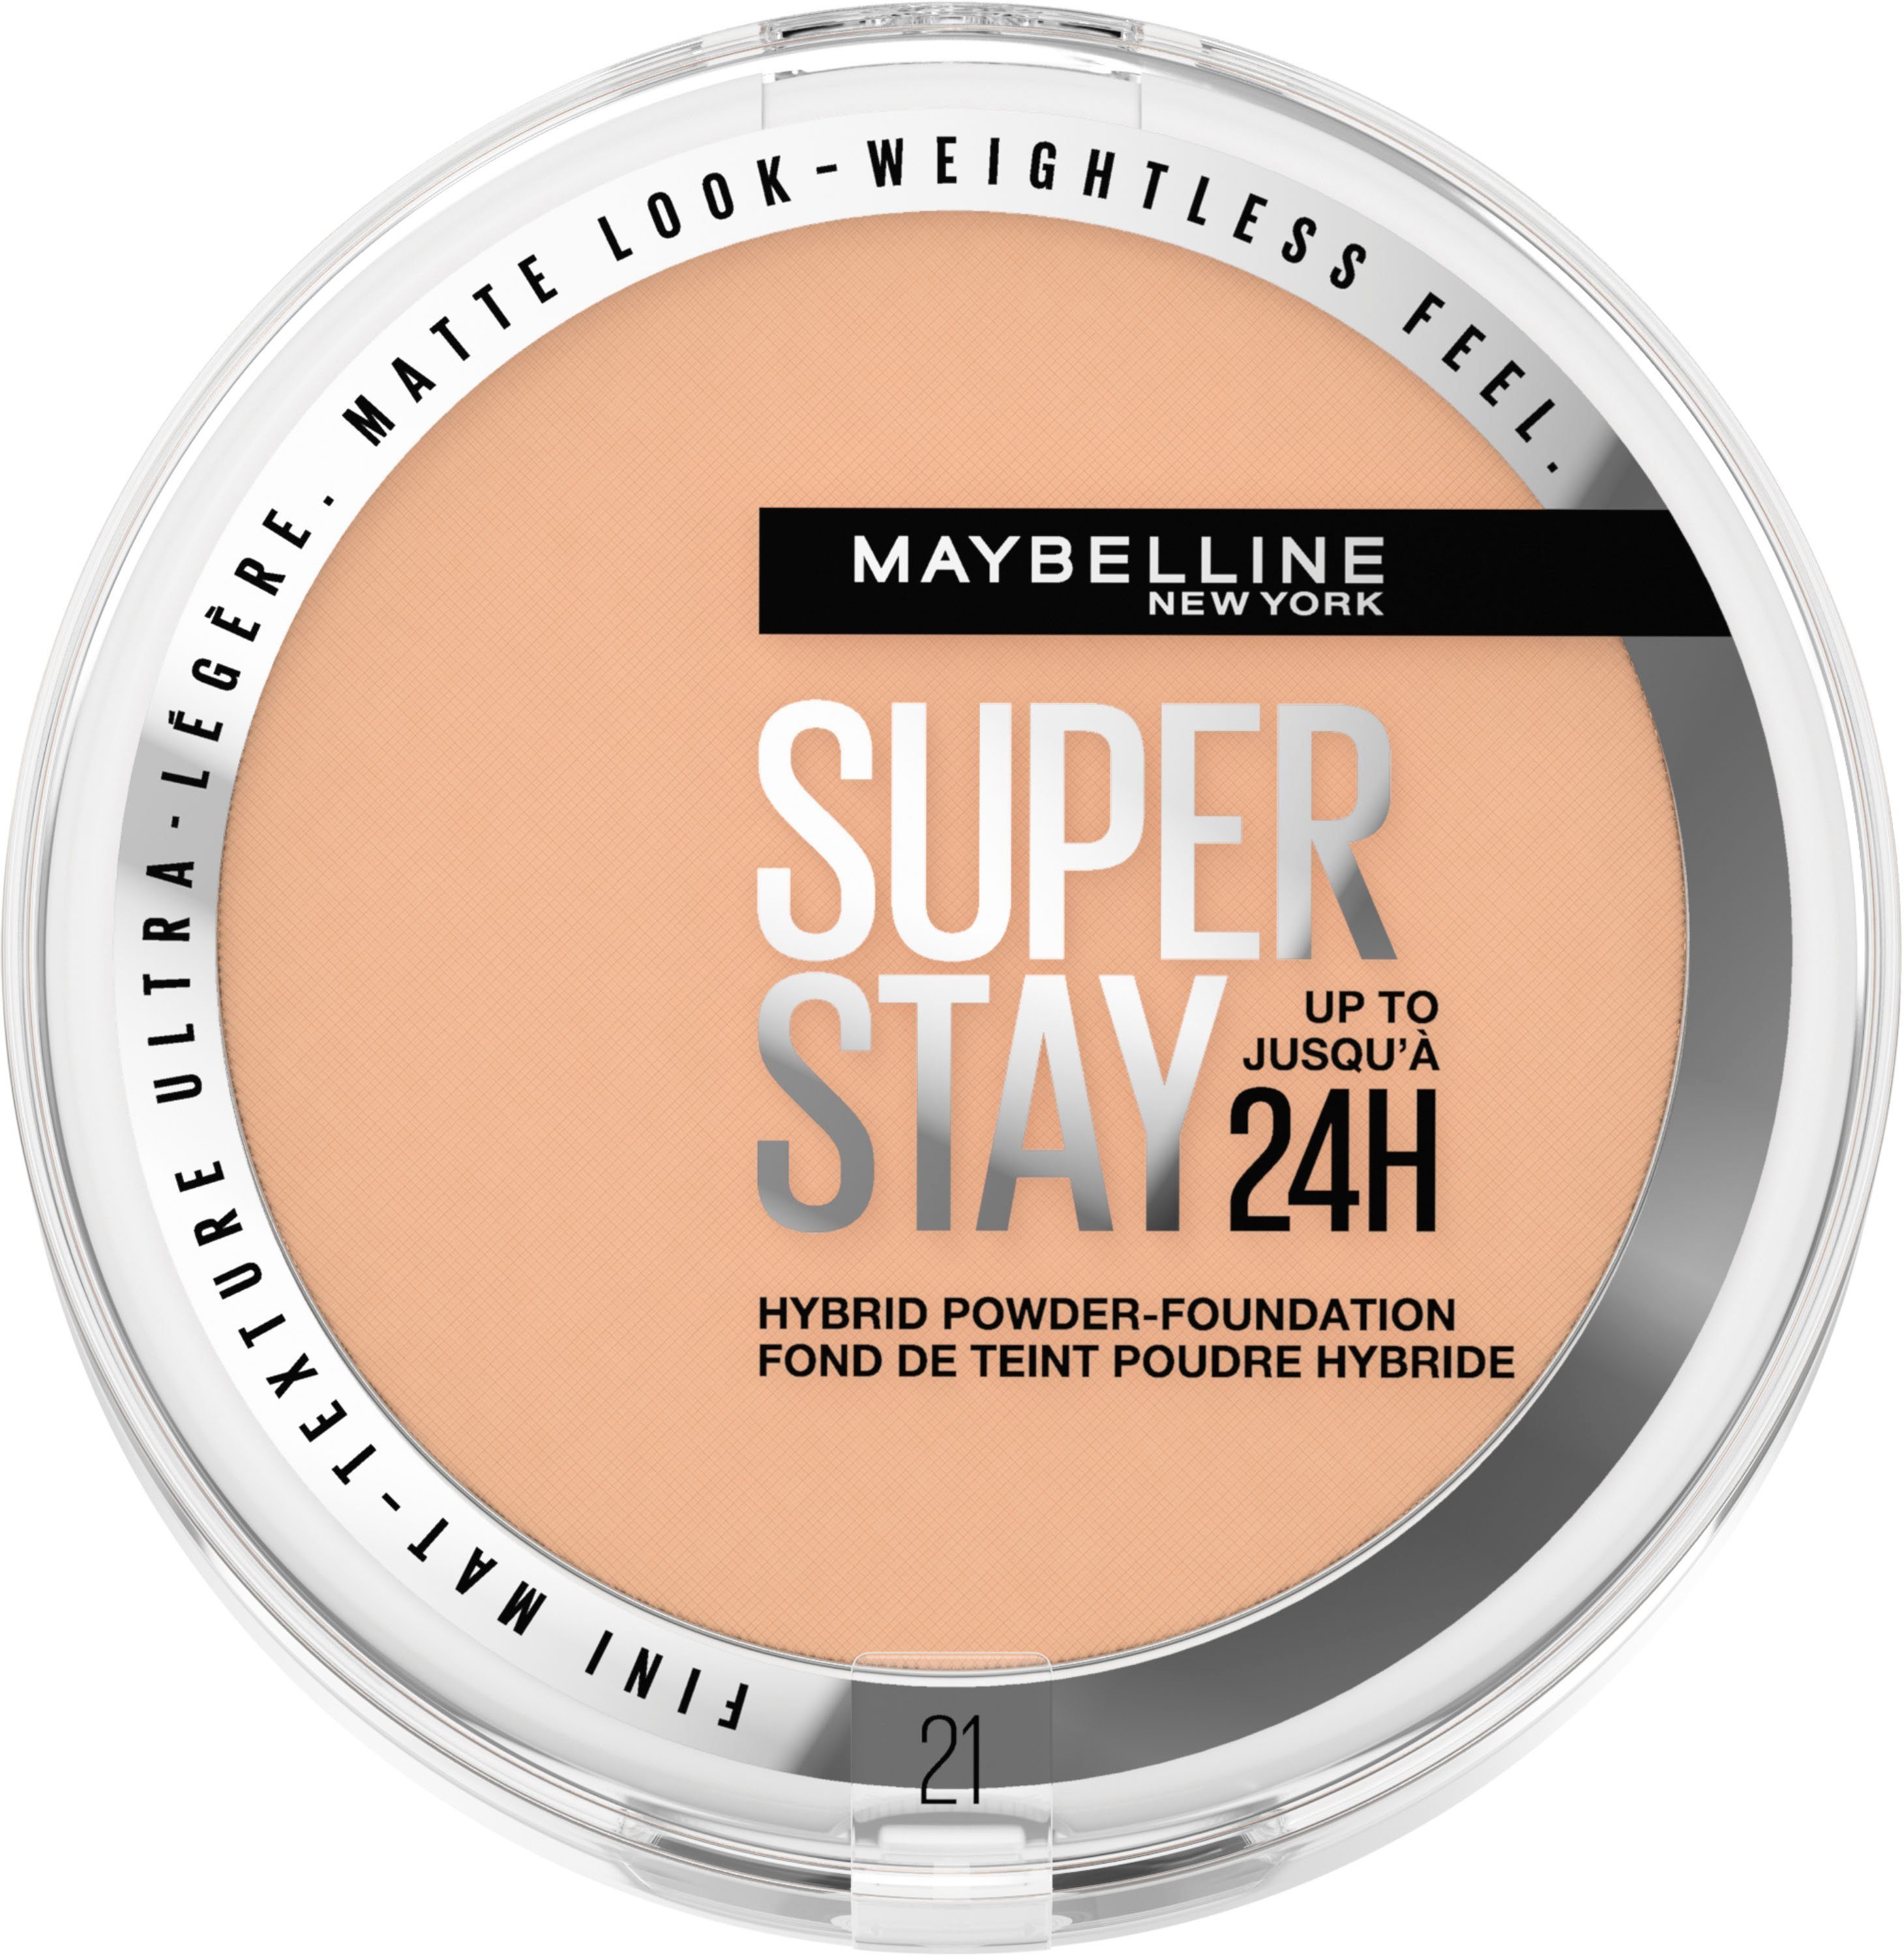 MAYBELLINE NEW YORK Foundation Super Hybrides Make-Up Maybelline Stay New Puder York